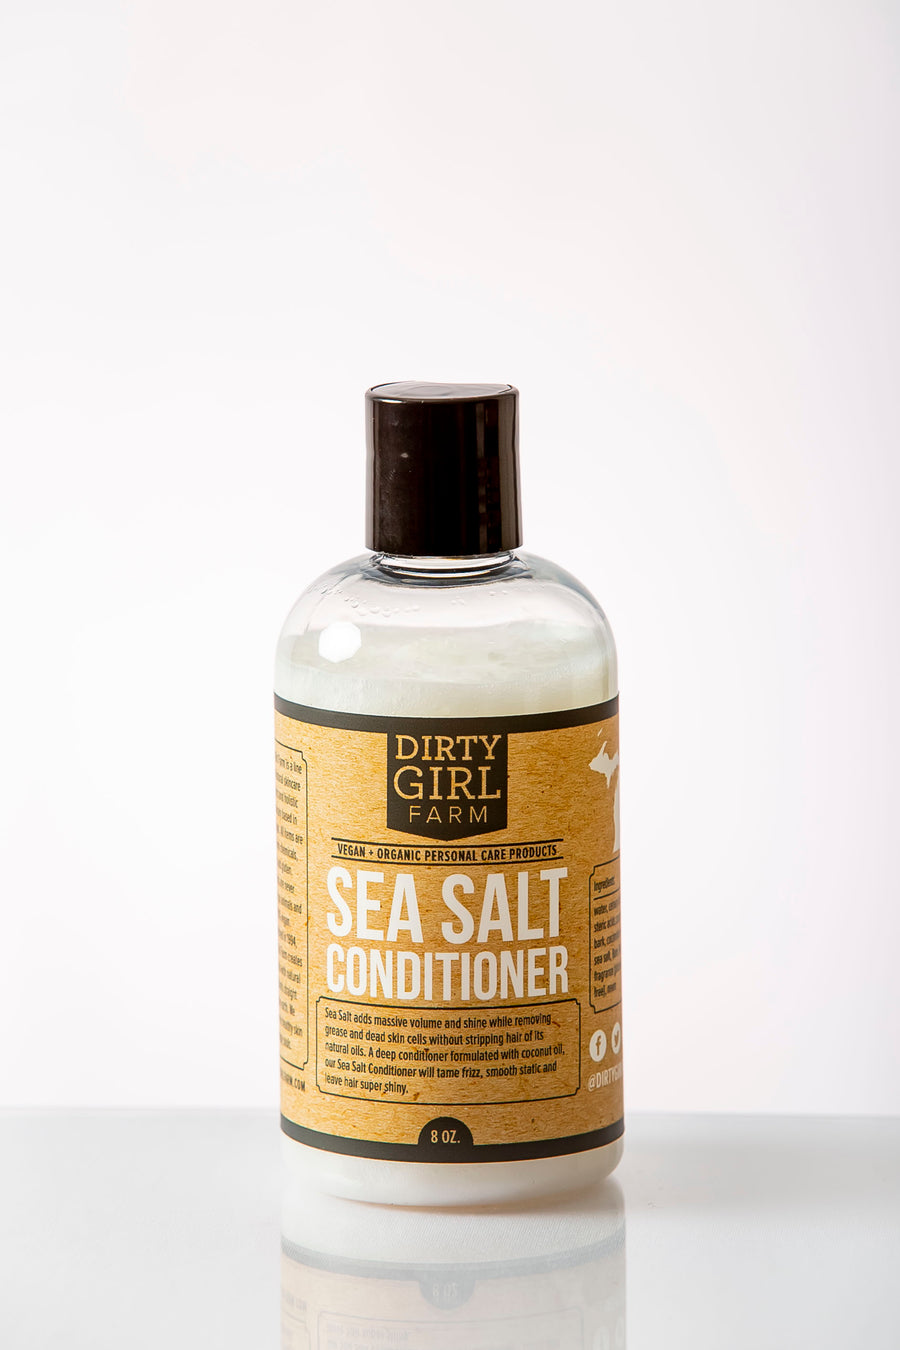 Sea Salt Conditioner Dirty Girl Farm